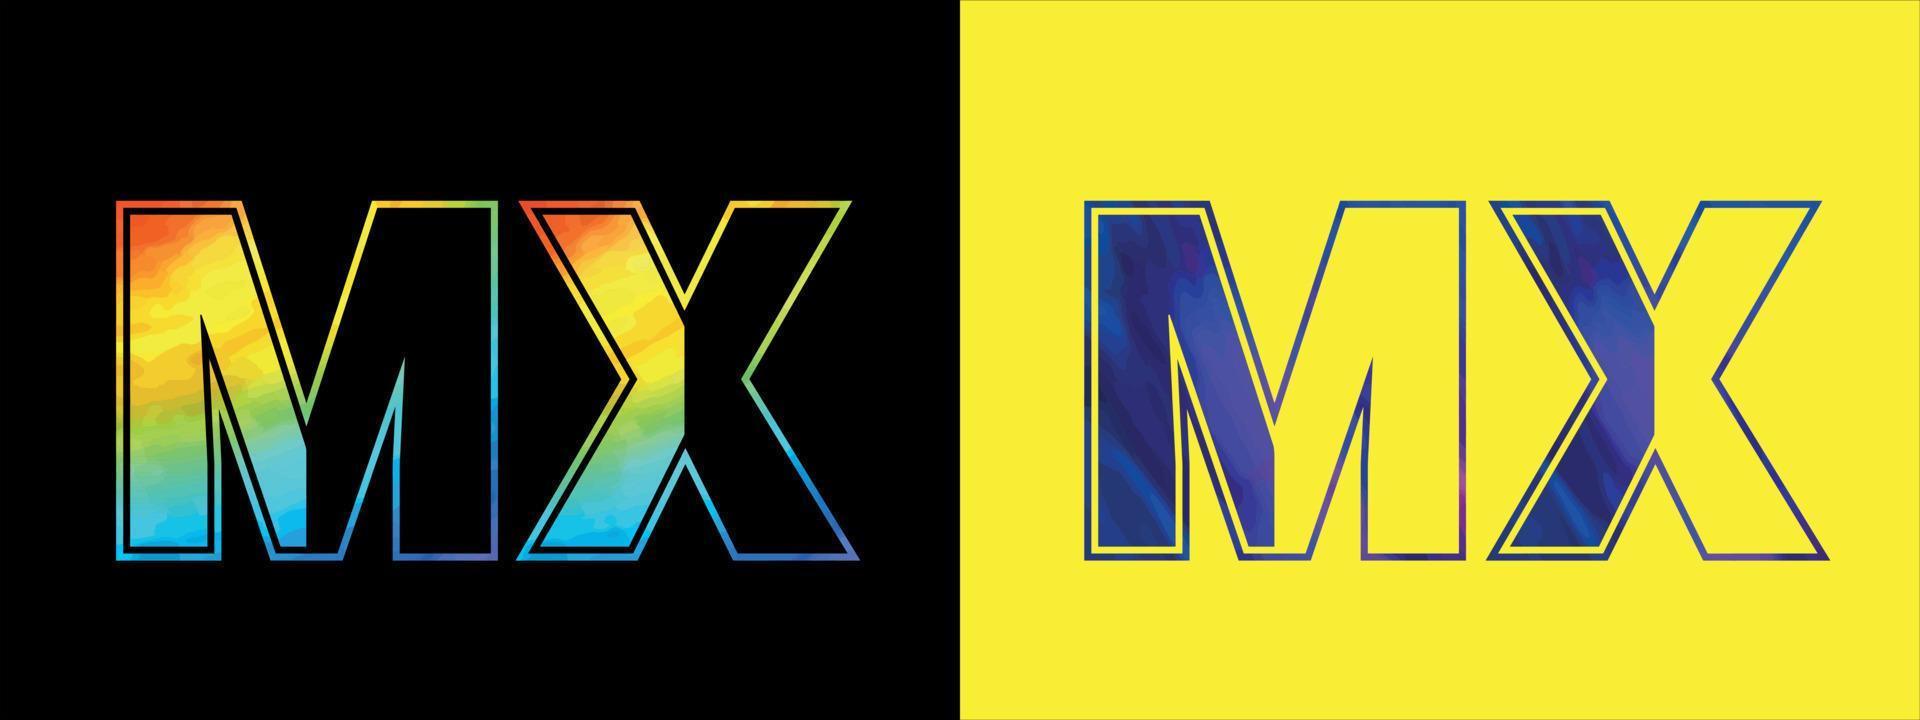 letra mx logo diseño vector modelo. creativo moderno lujoso logotipo para corporativo negocio identidad